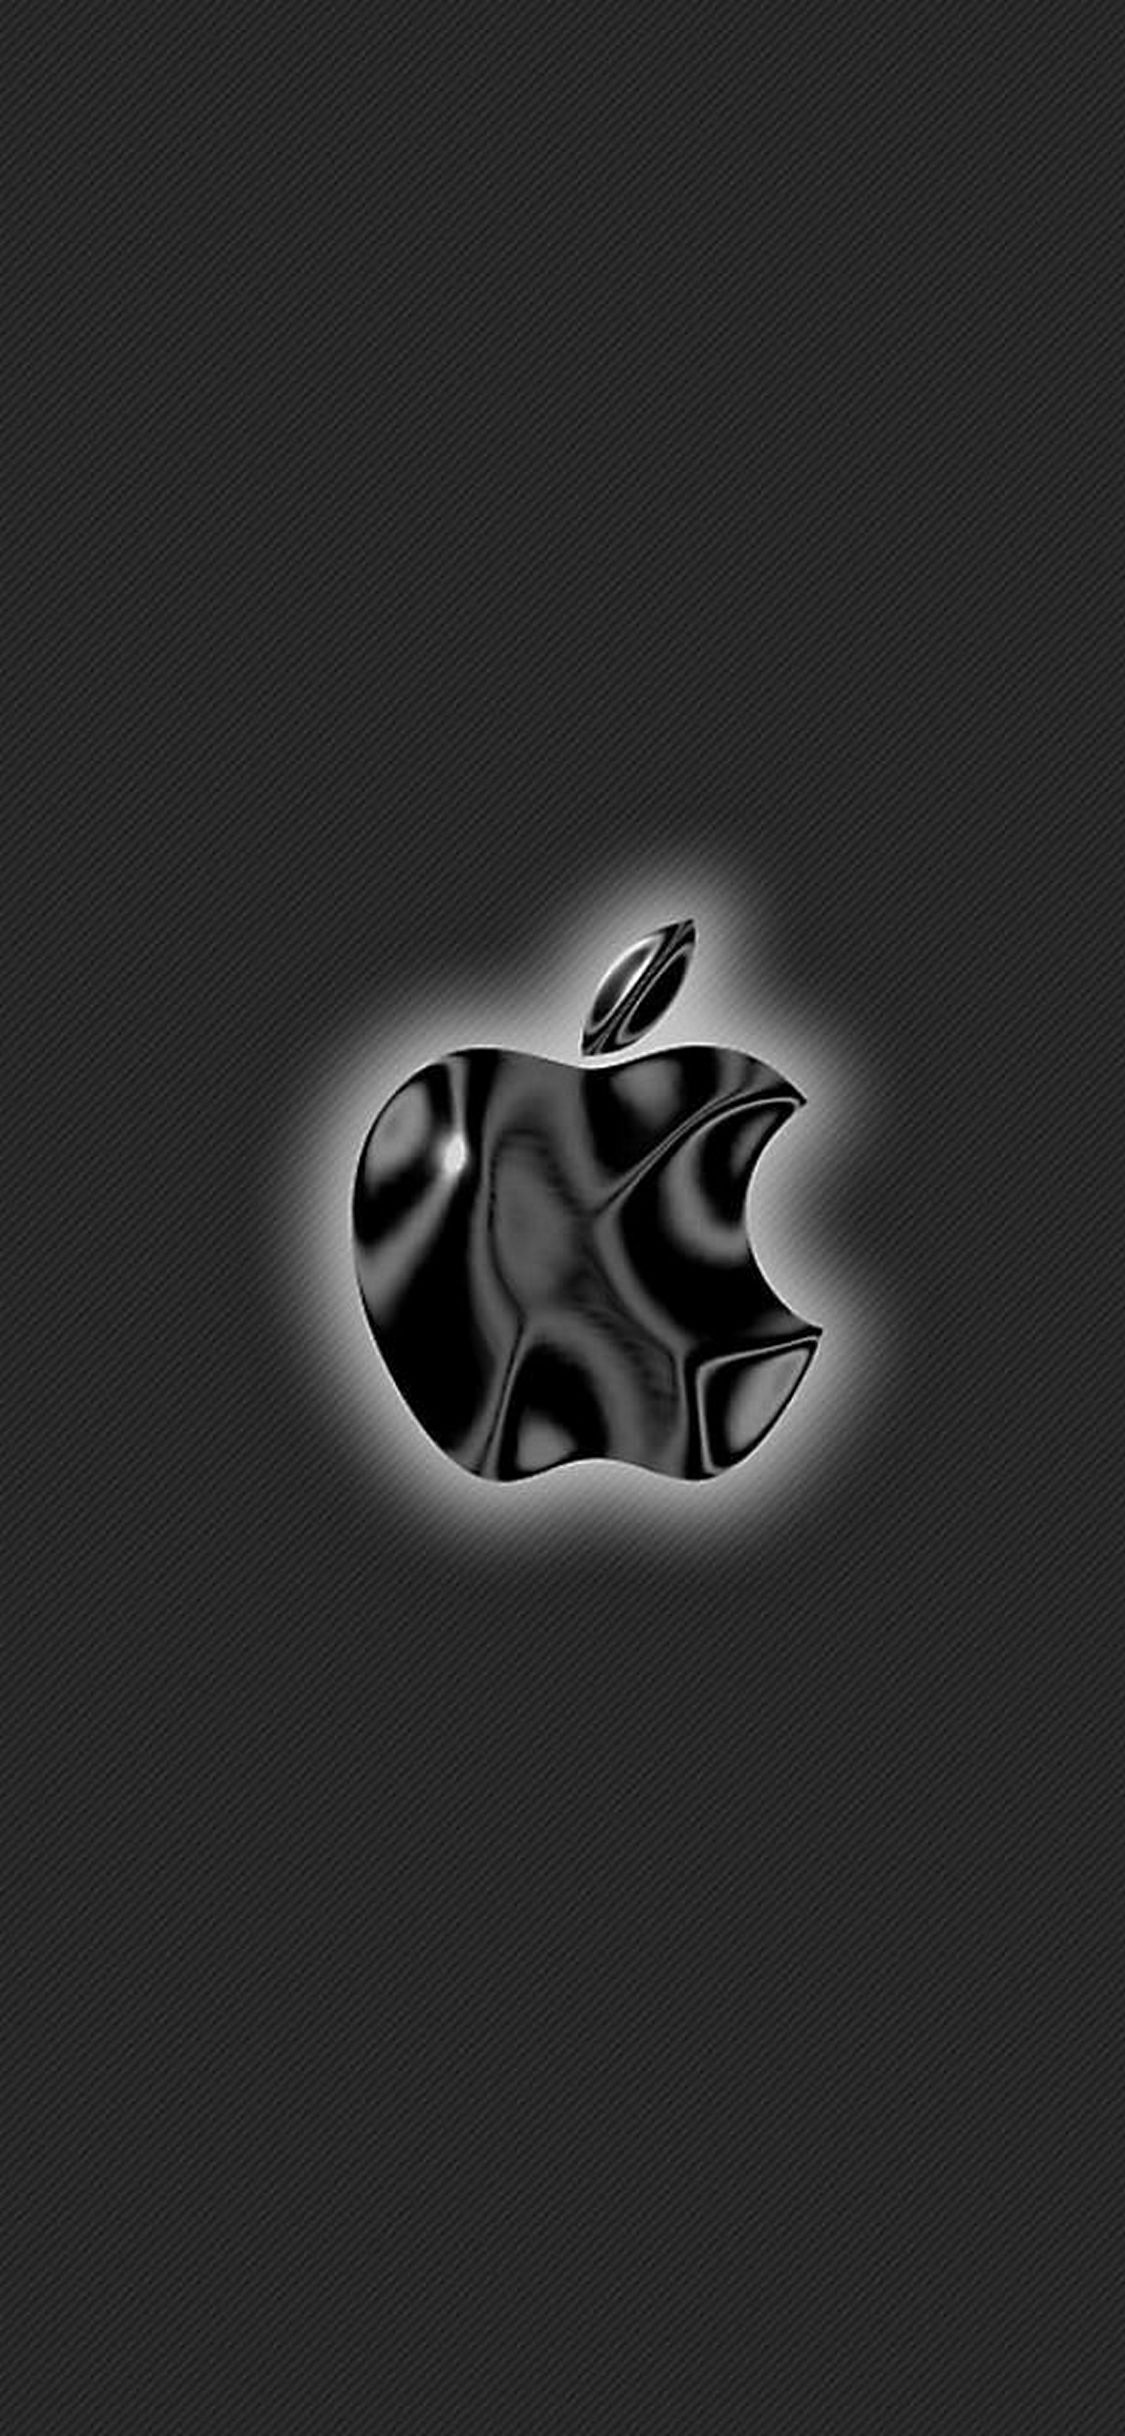 500 Apple Logo Pictures HD  Download Free Images on Unsplash